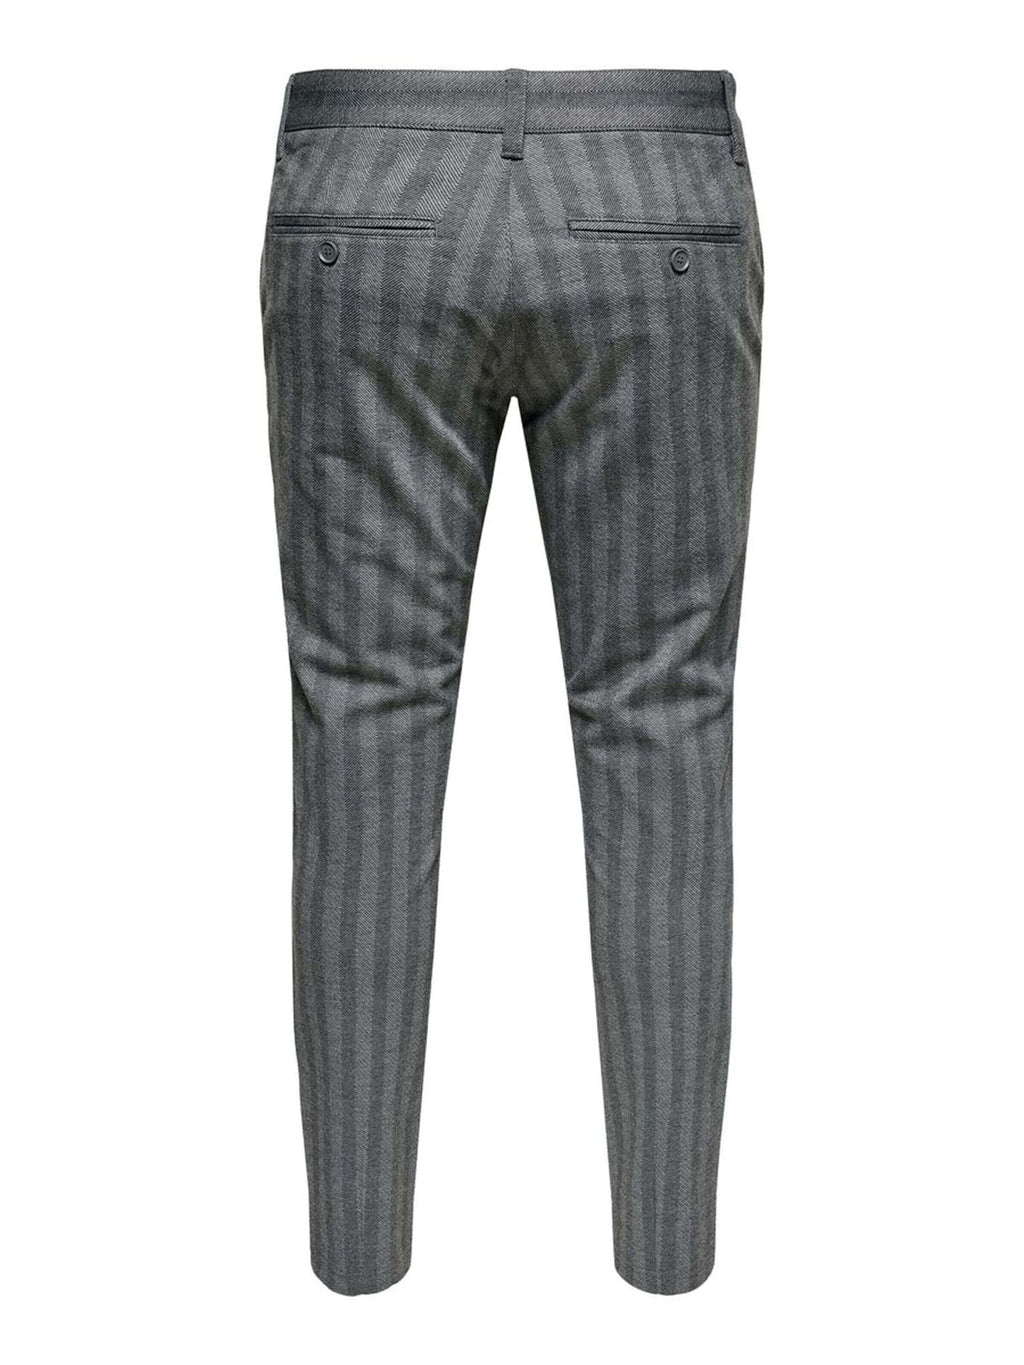 Marcos pantalones rayados - gris claro